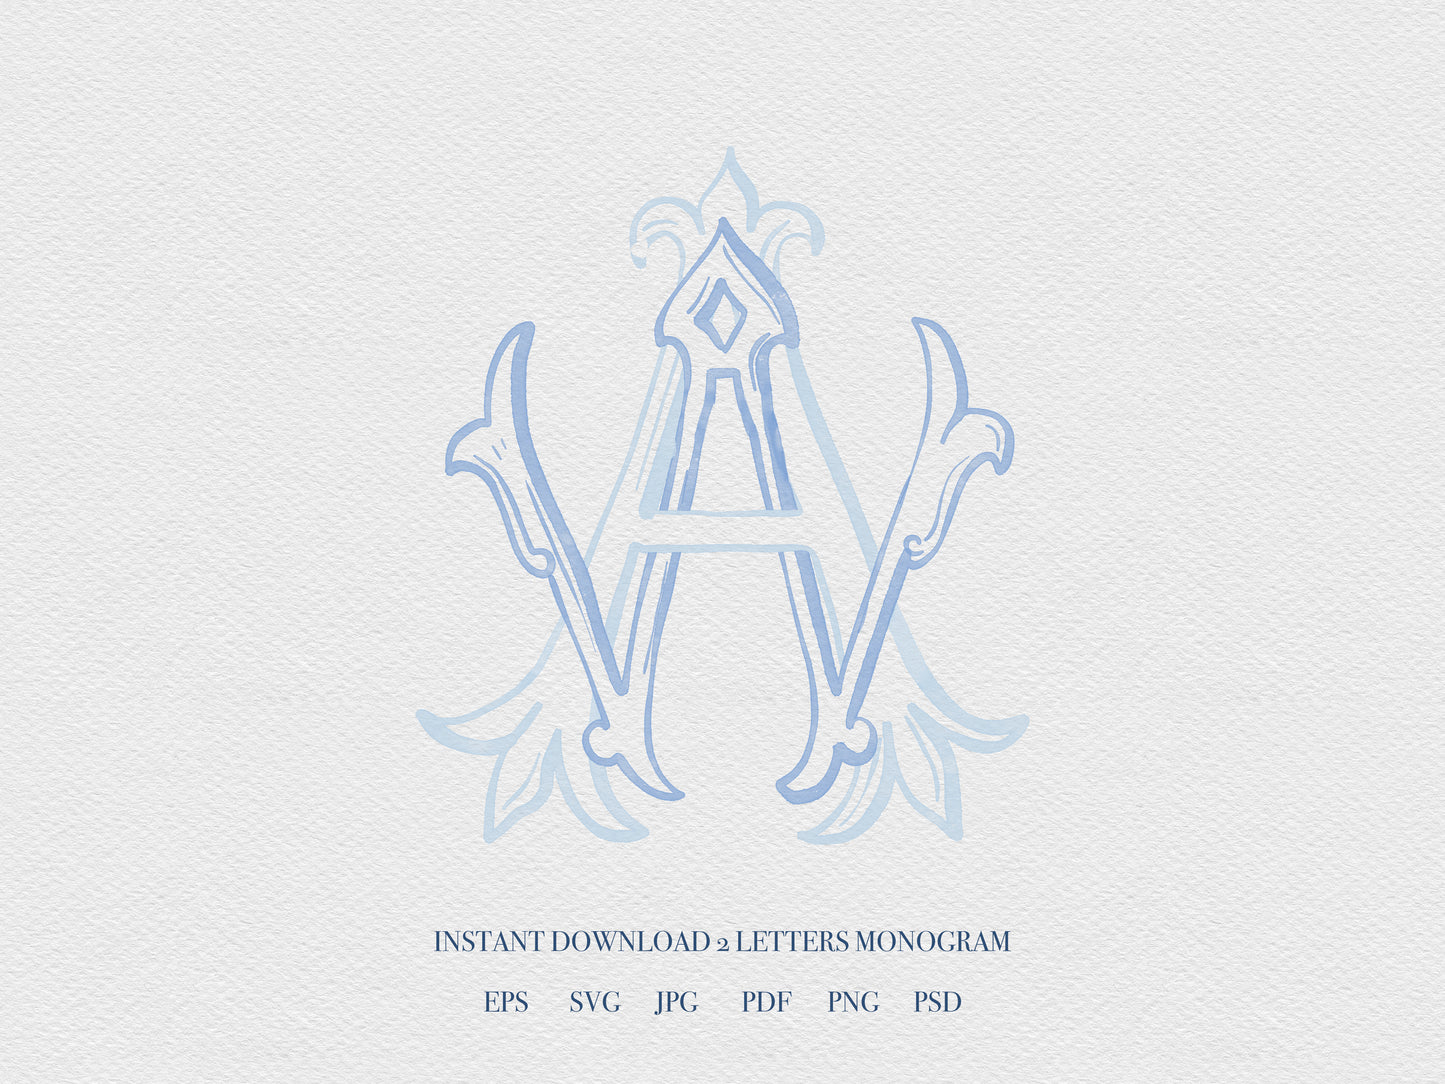 2 Letter Monogram with Letters AW WA | Digital Download - Wedding Monogram SVG, Personal Logo, Wedding Logo for Wedding Invitations